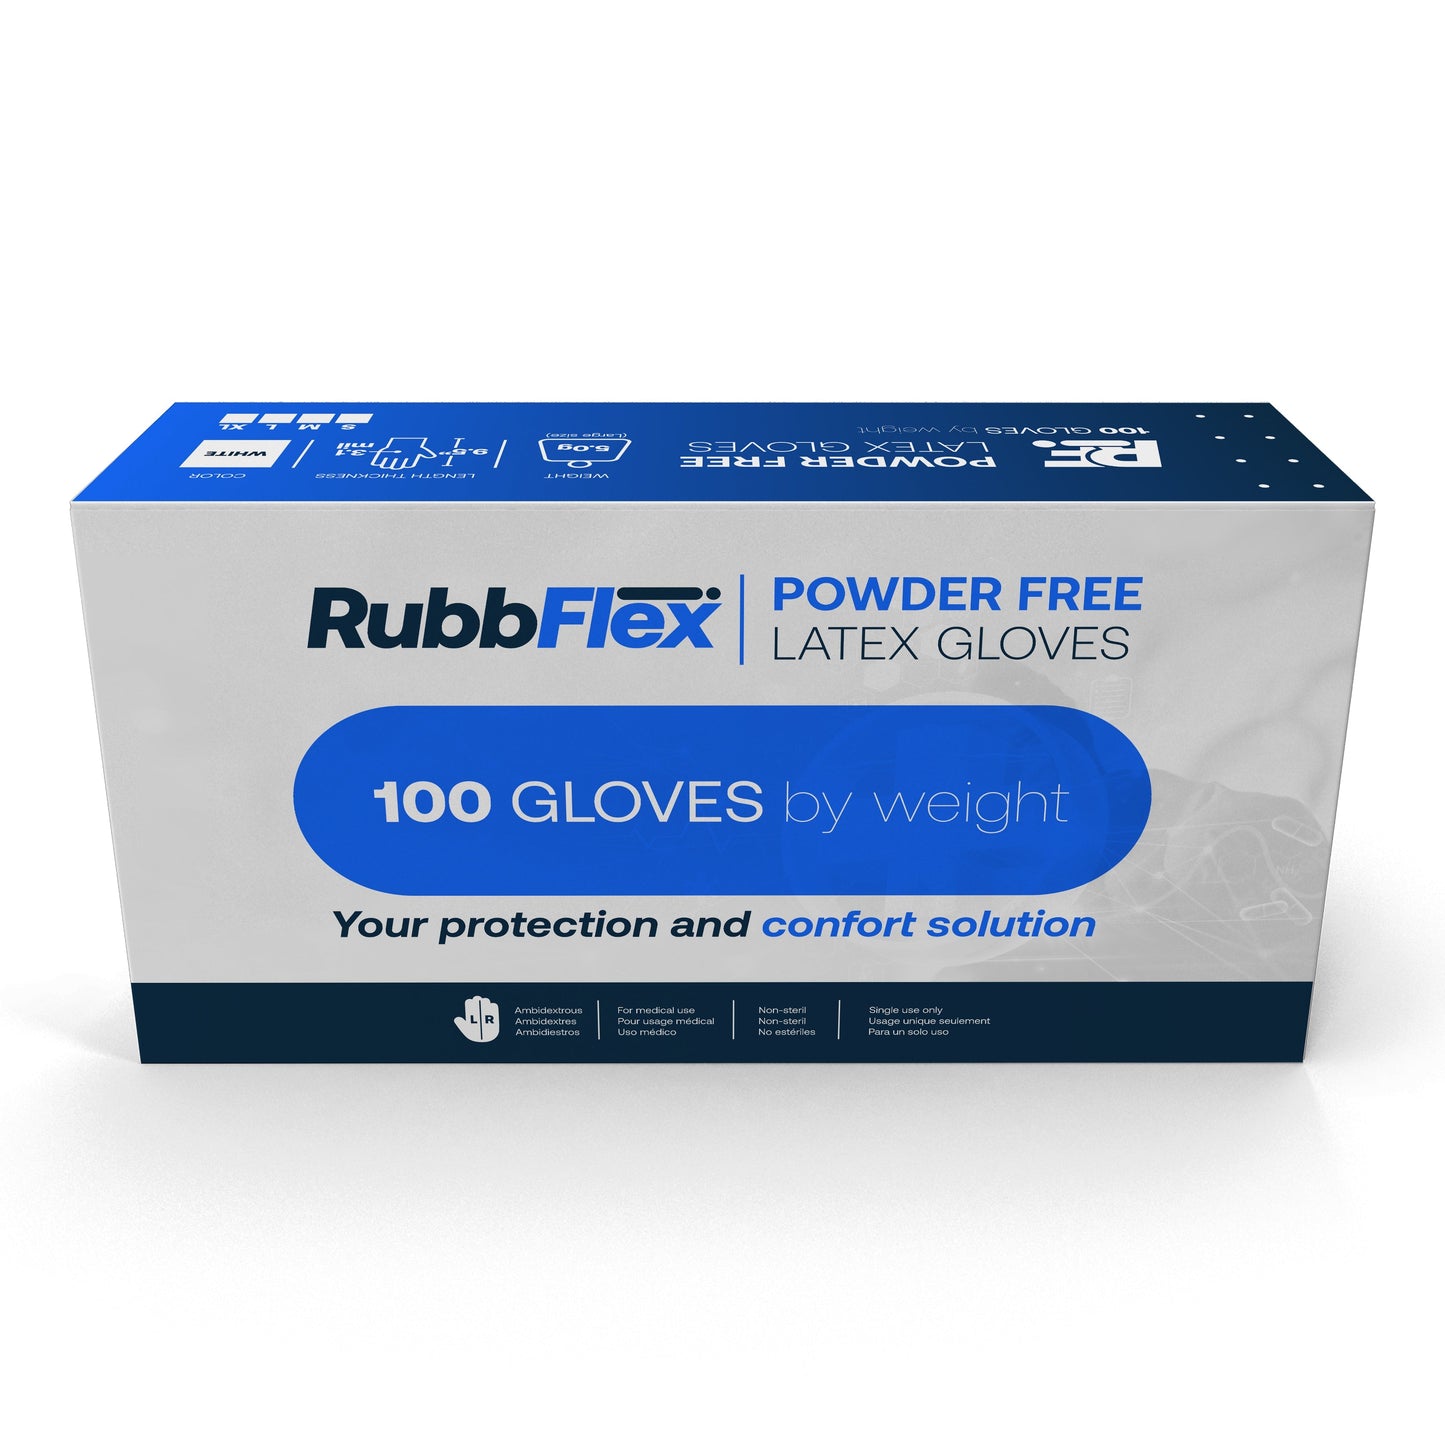 Rubbflex Latex Powder Free Disposable Gloves RLX1000M - Medical Exam Grade - 3.1 mil Thick (Pack of 1000) MEDIUM